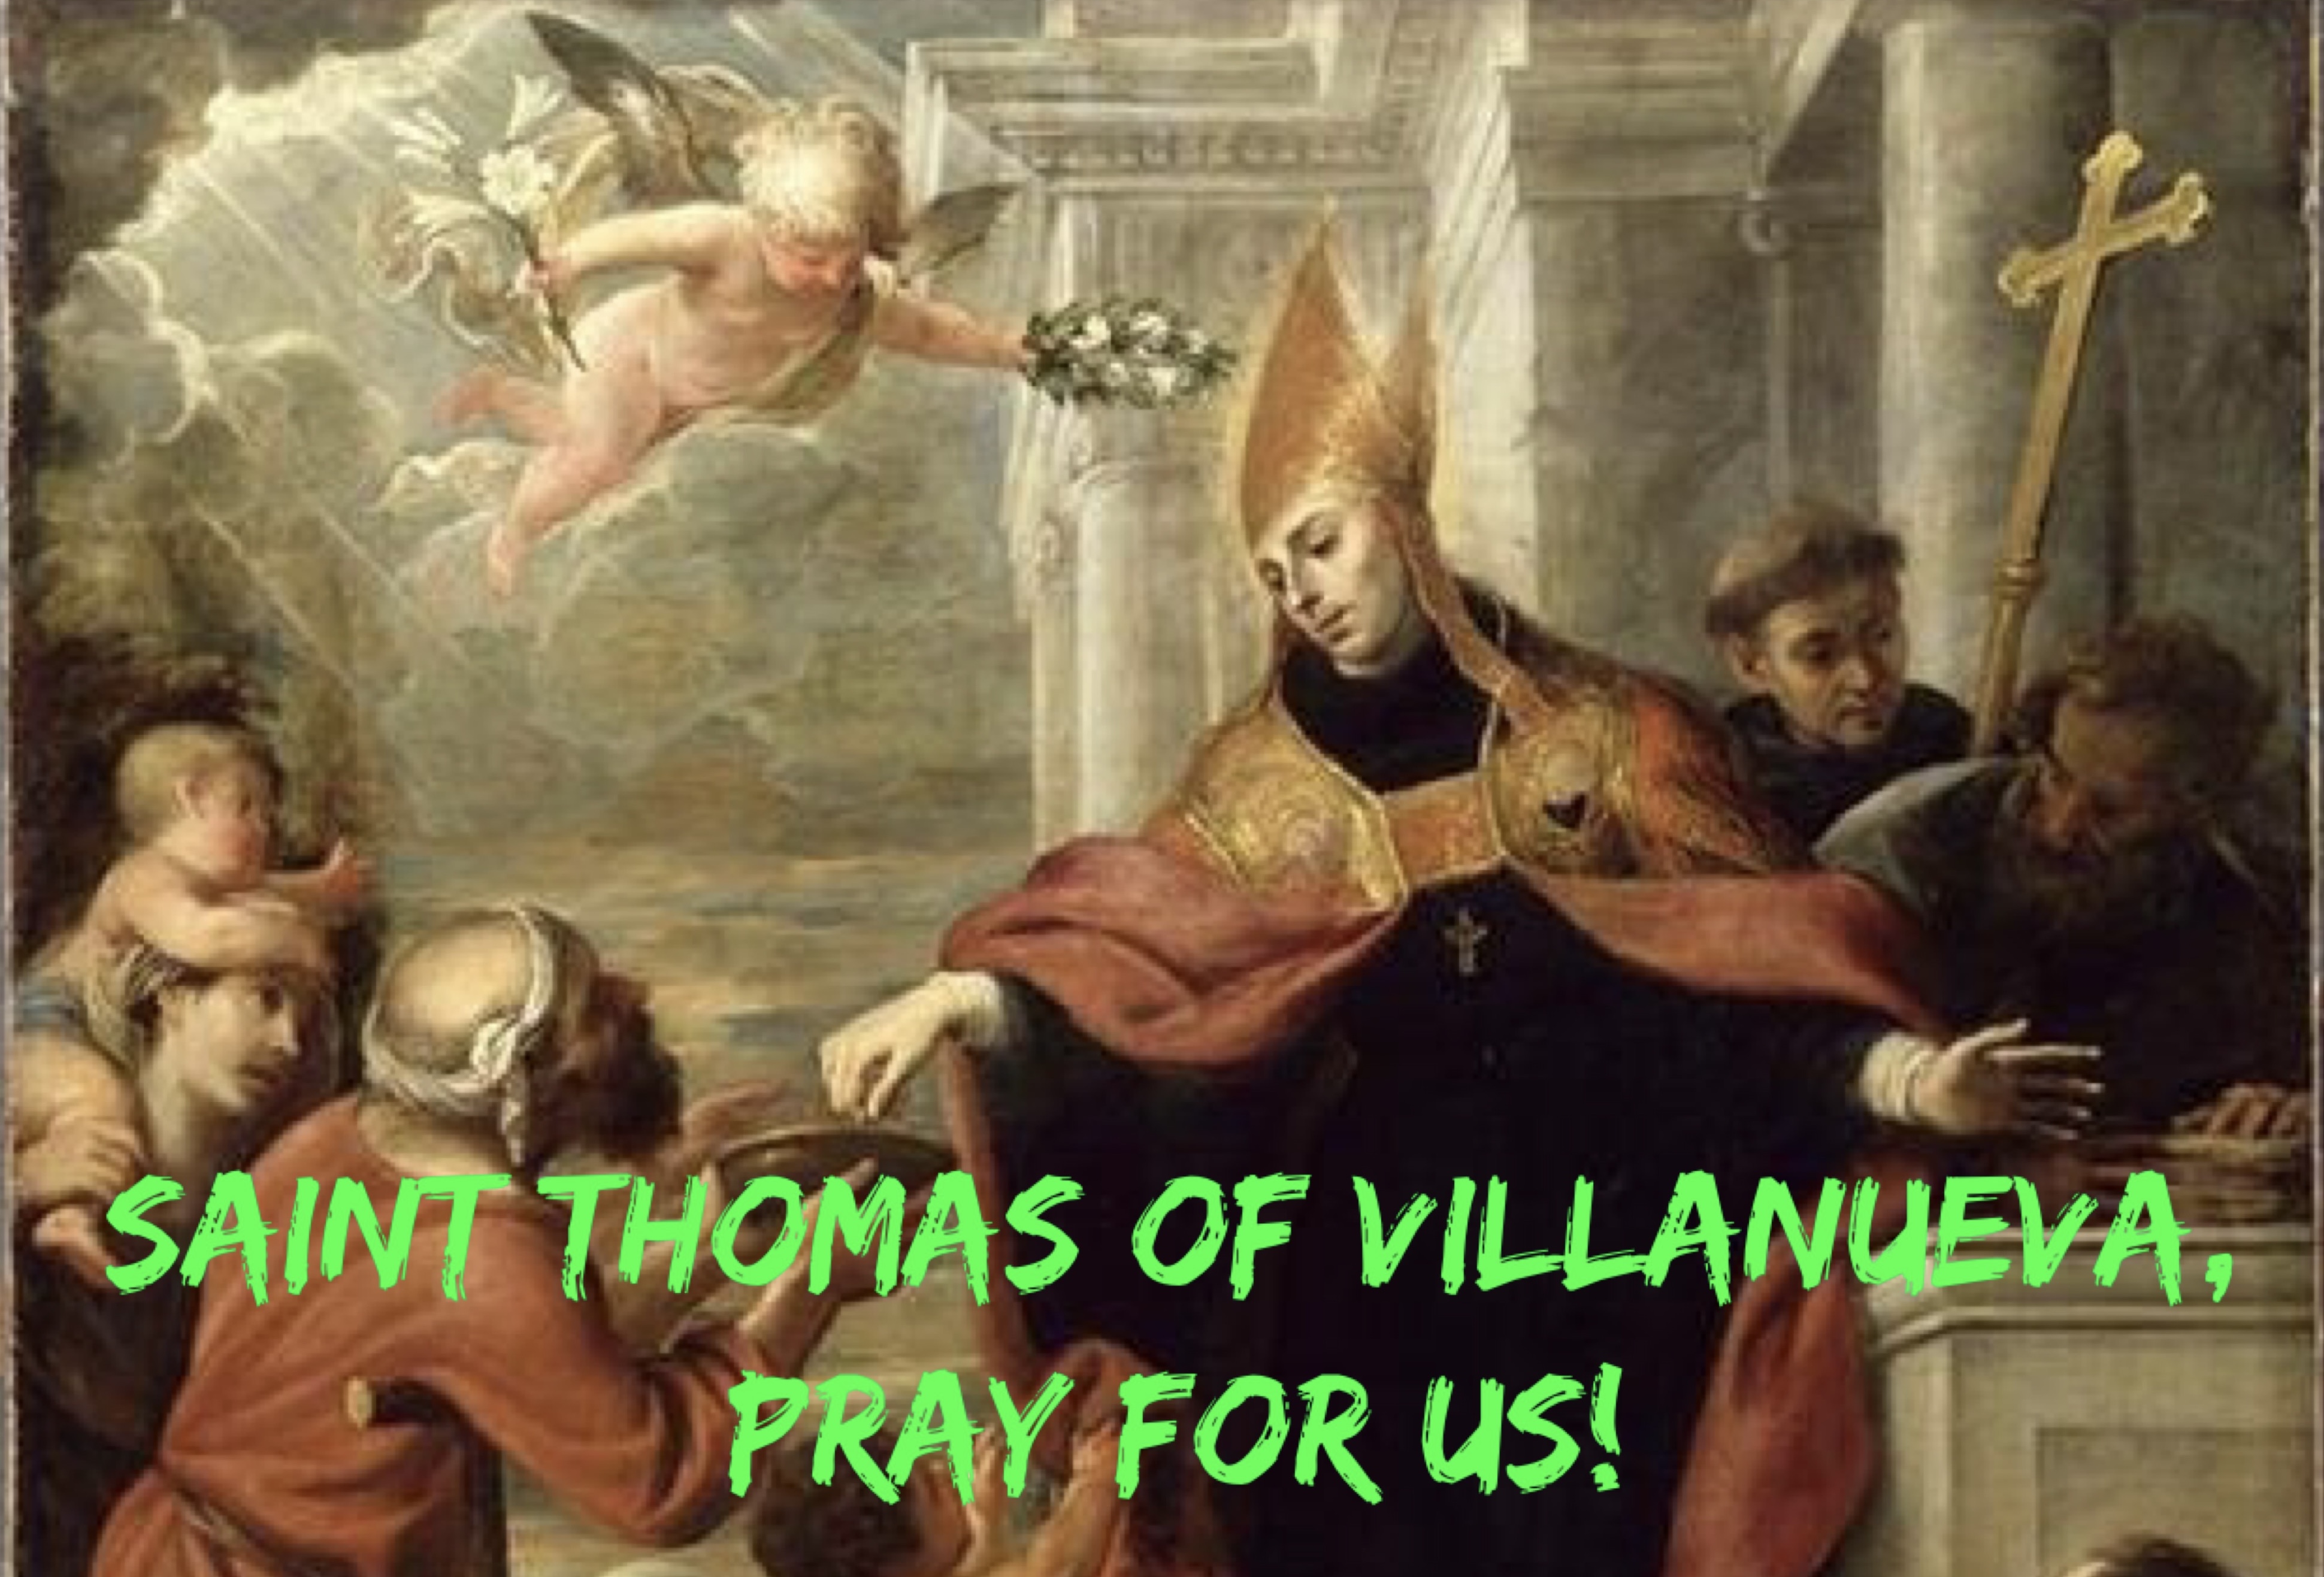 22nd September - Saint Thomas of Villanueva